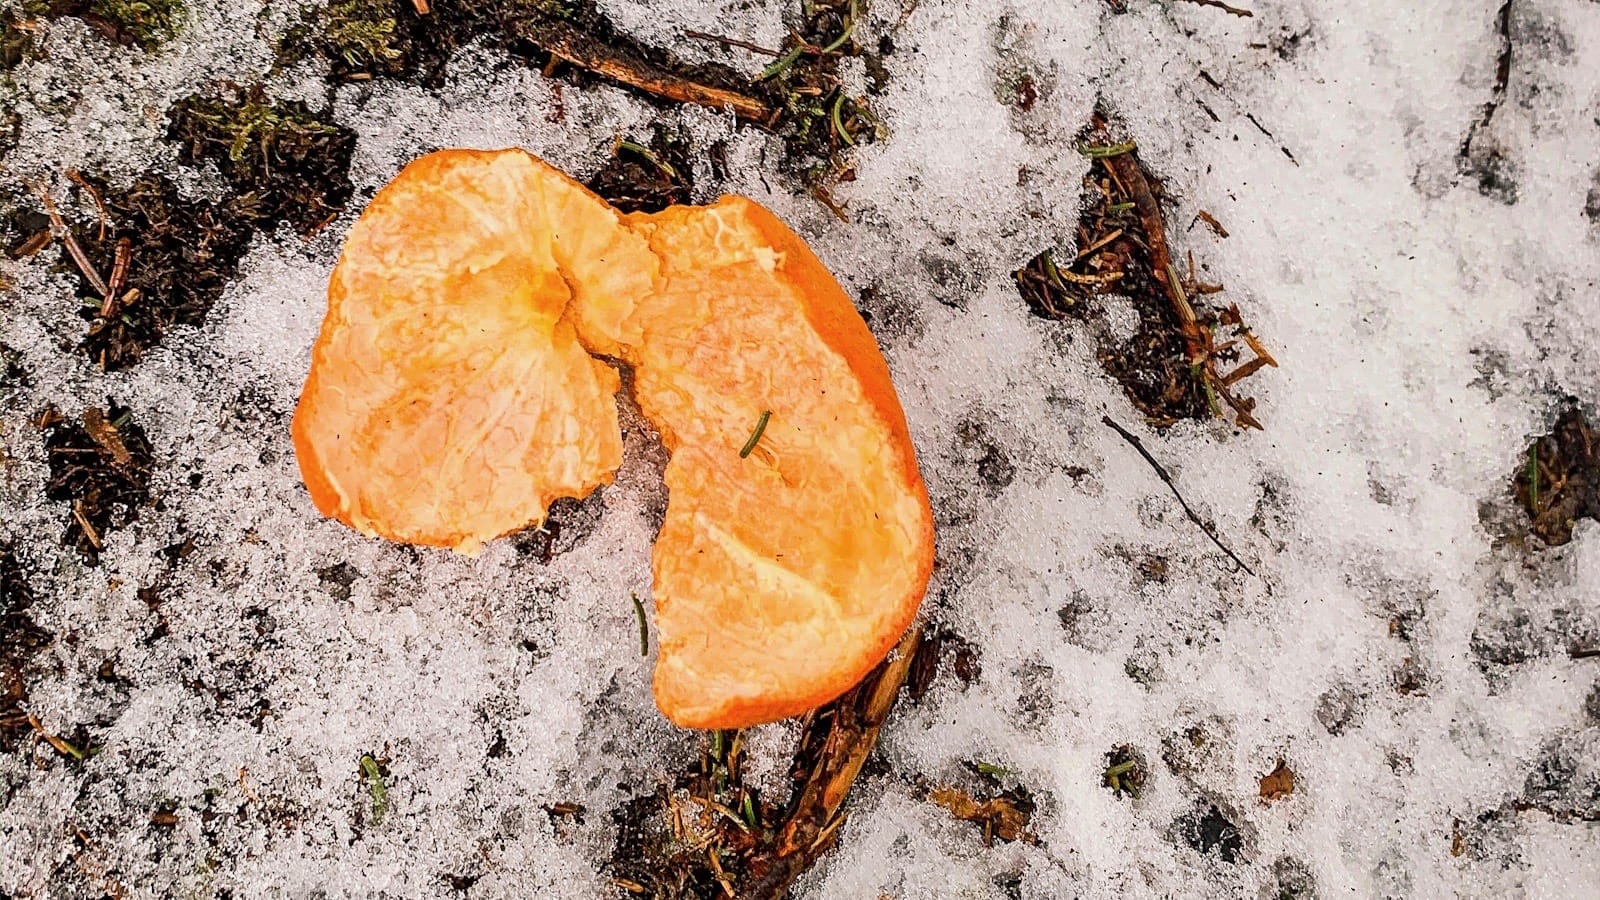 discarded orange peel sitting on snowy ground